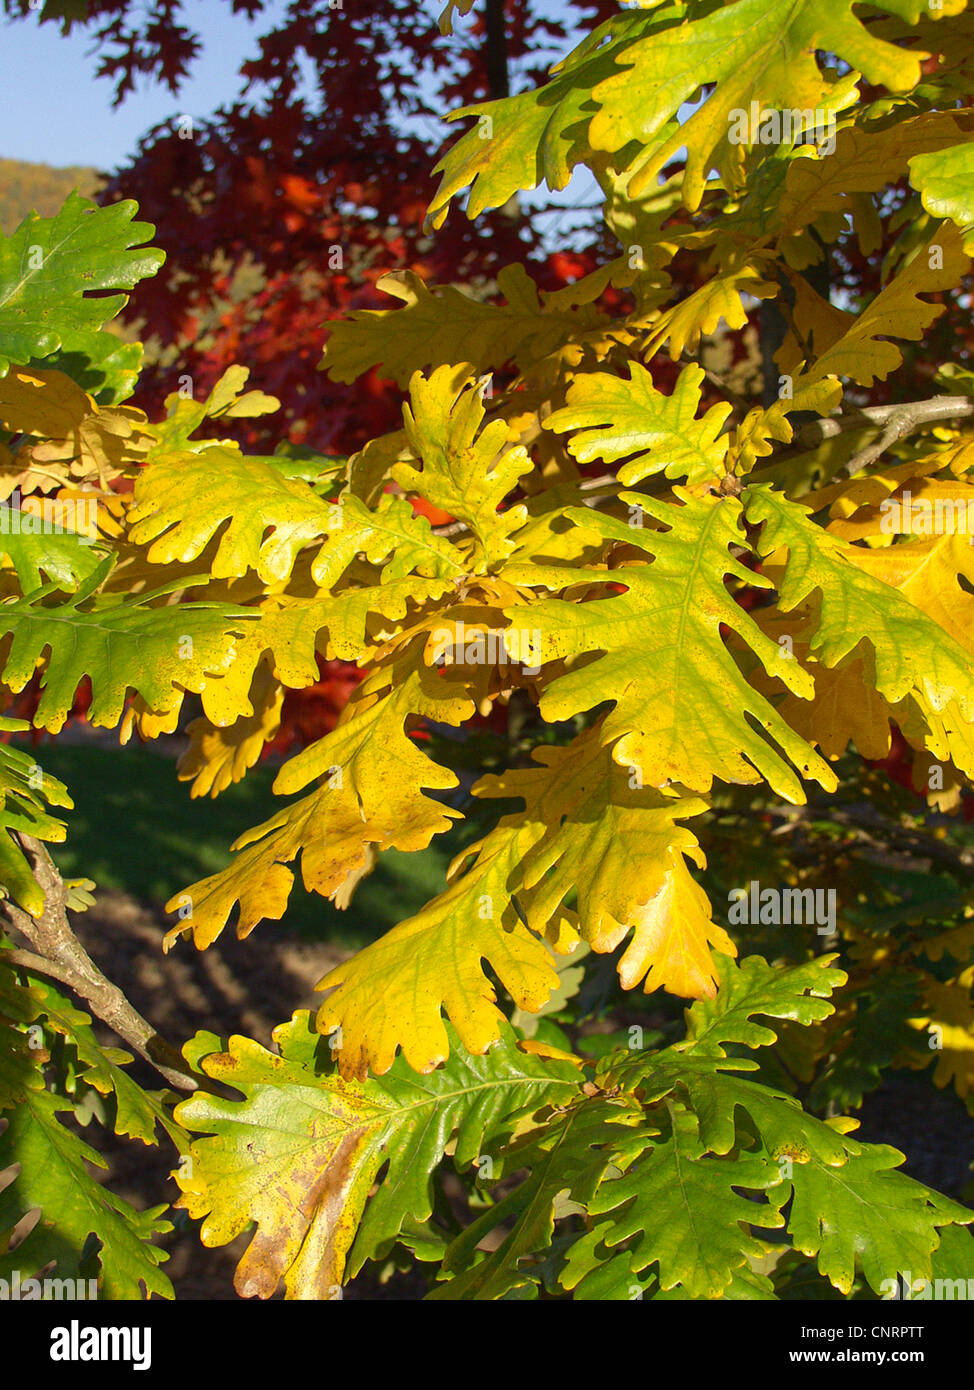 hungarian oak (Quercus frainetto), in autumn colouration Stock Photo